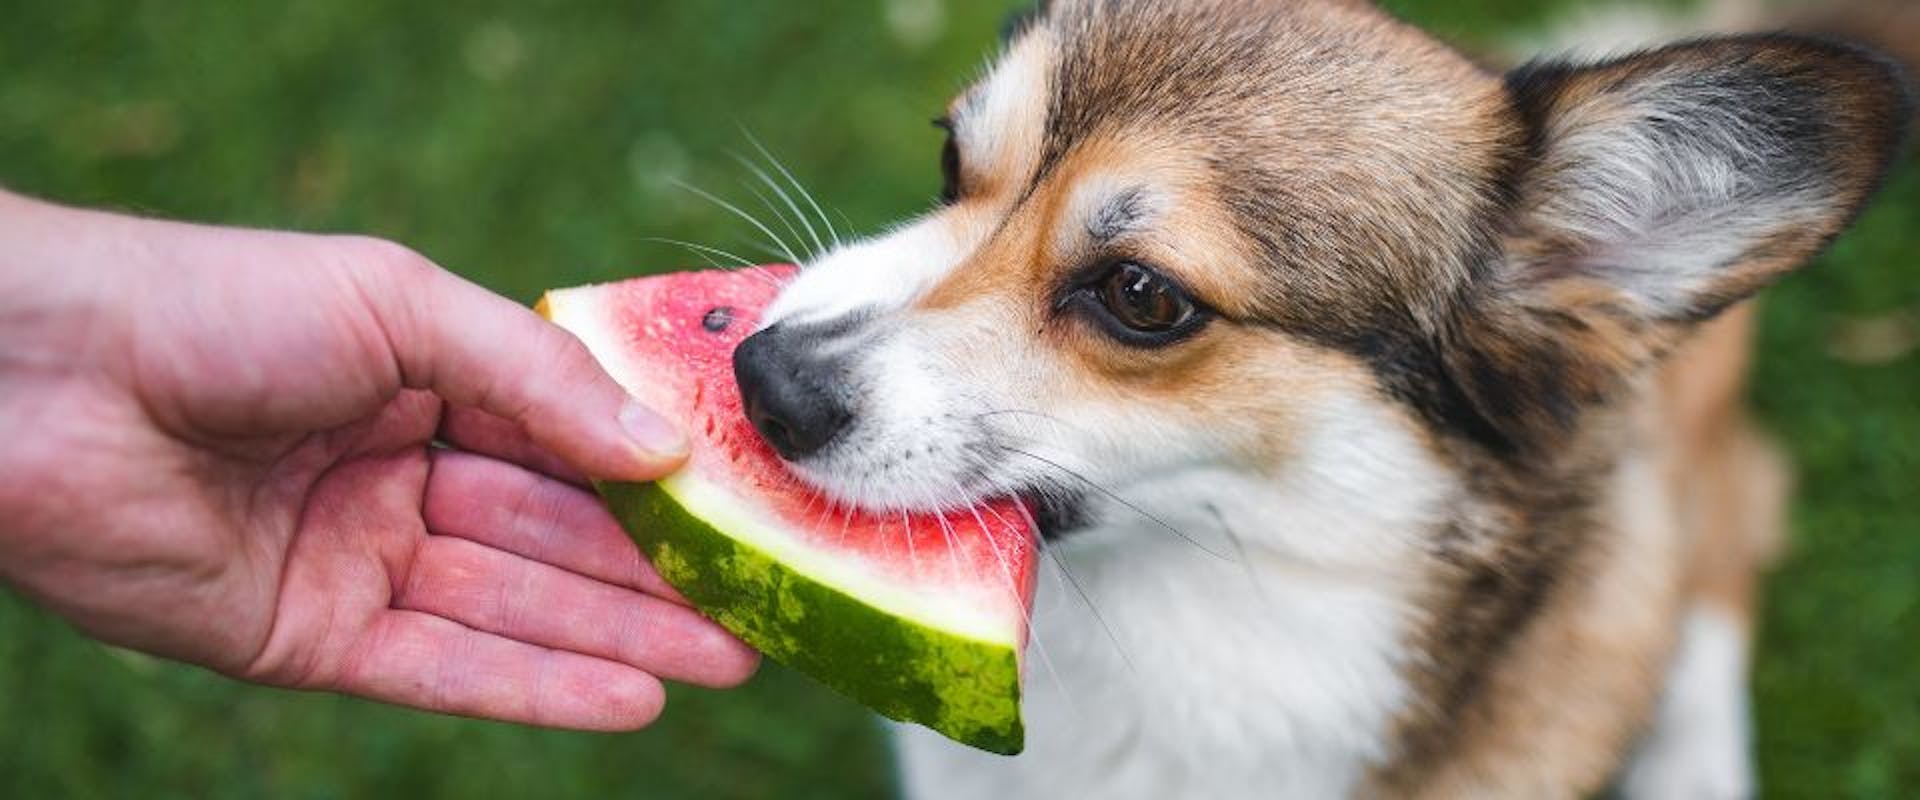 Corgi dog eating watermelon